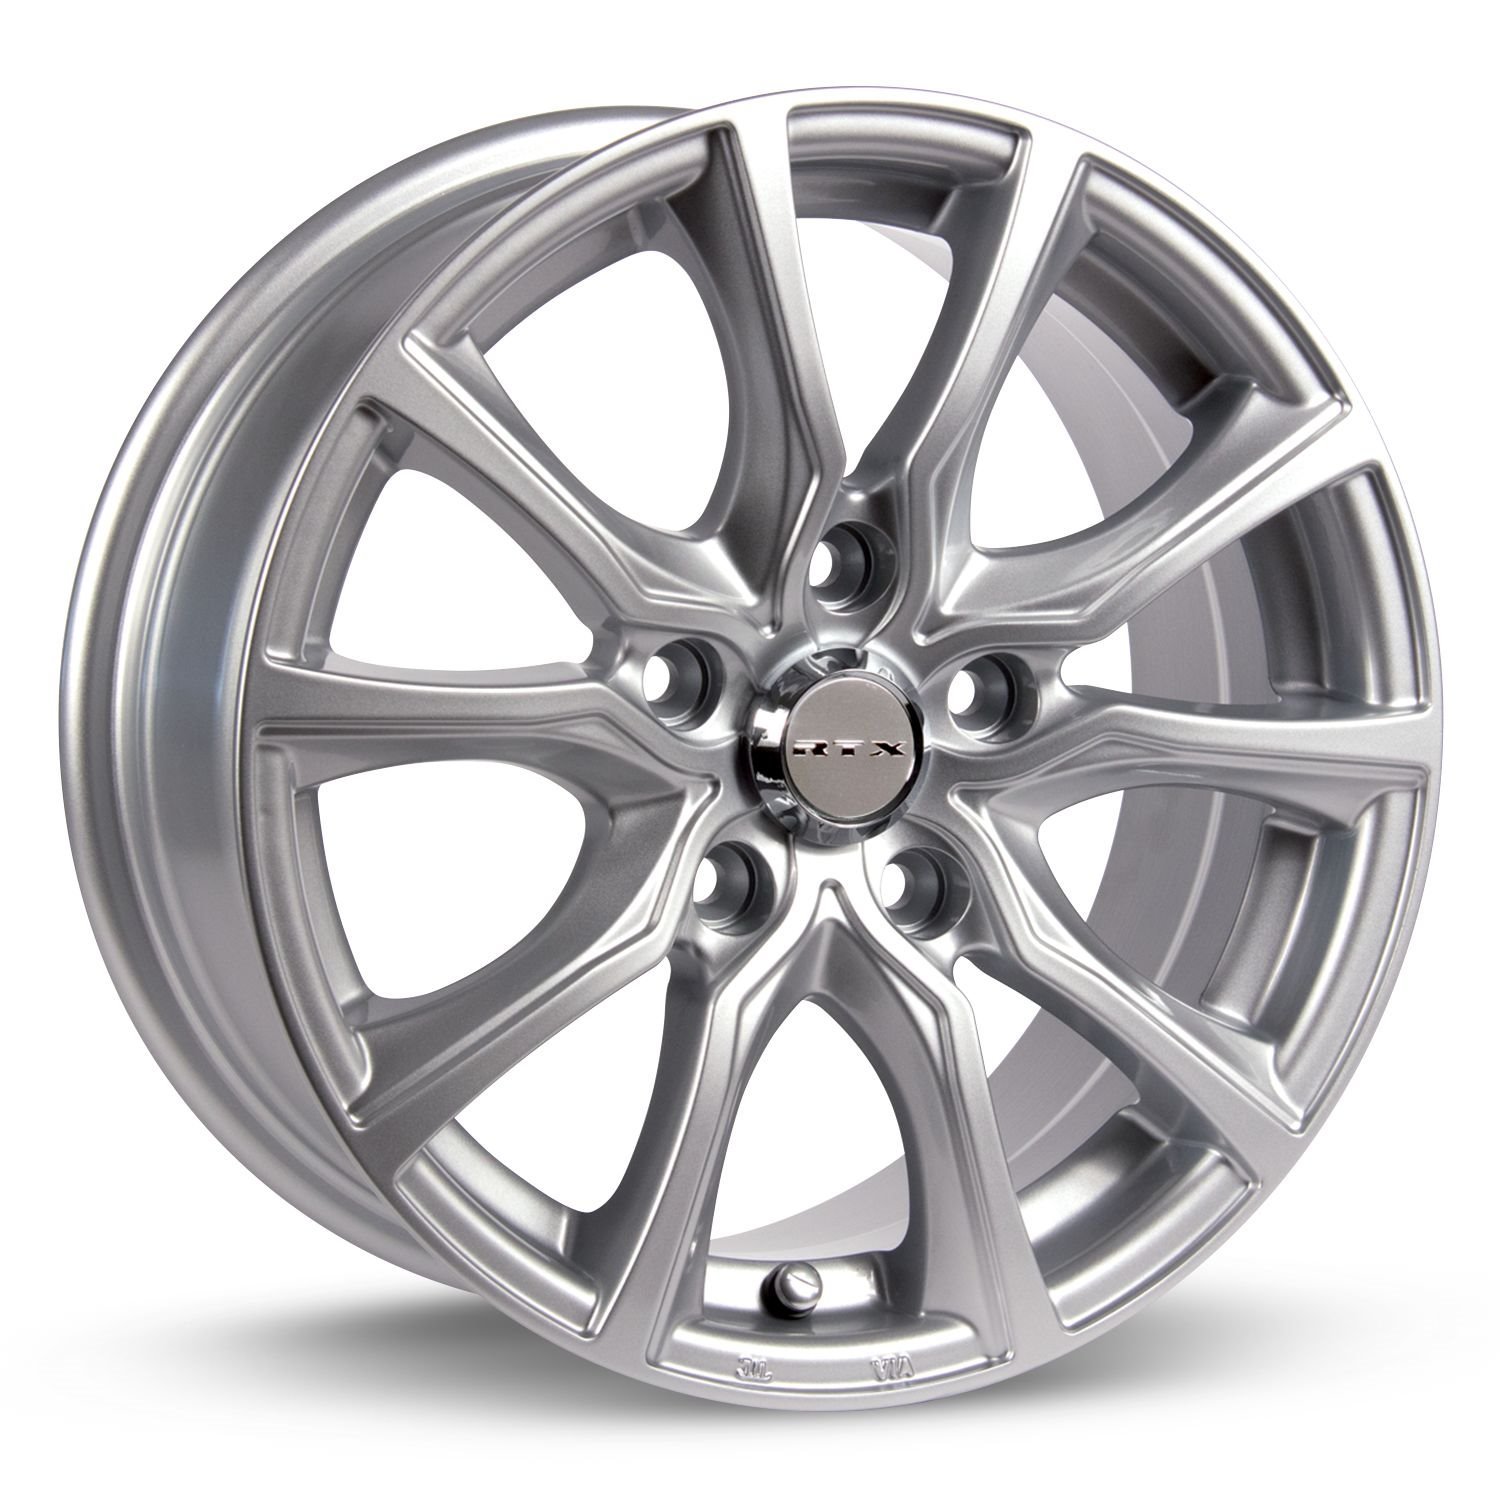 081461 RTX-Series Contour Wheel [Size: 18" x 8"] Silver Finish